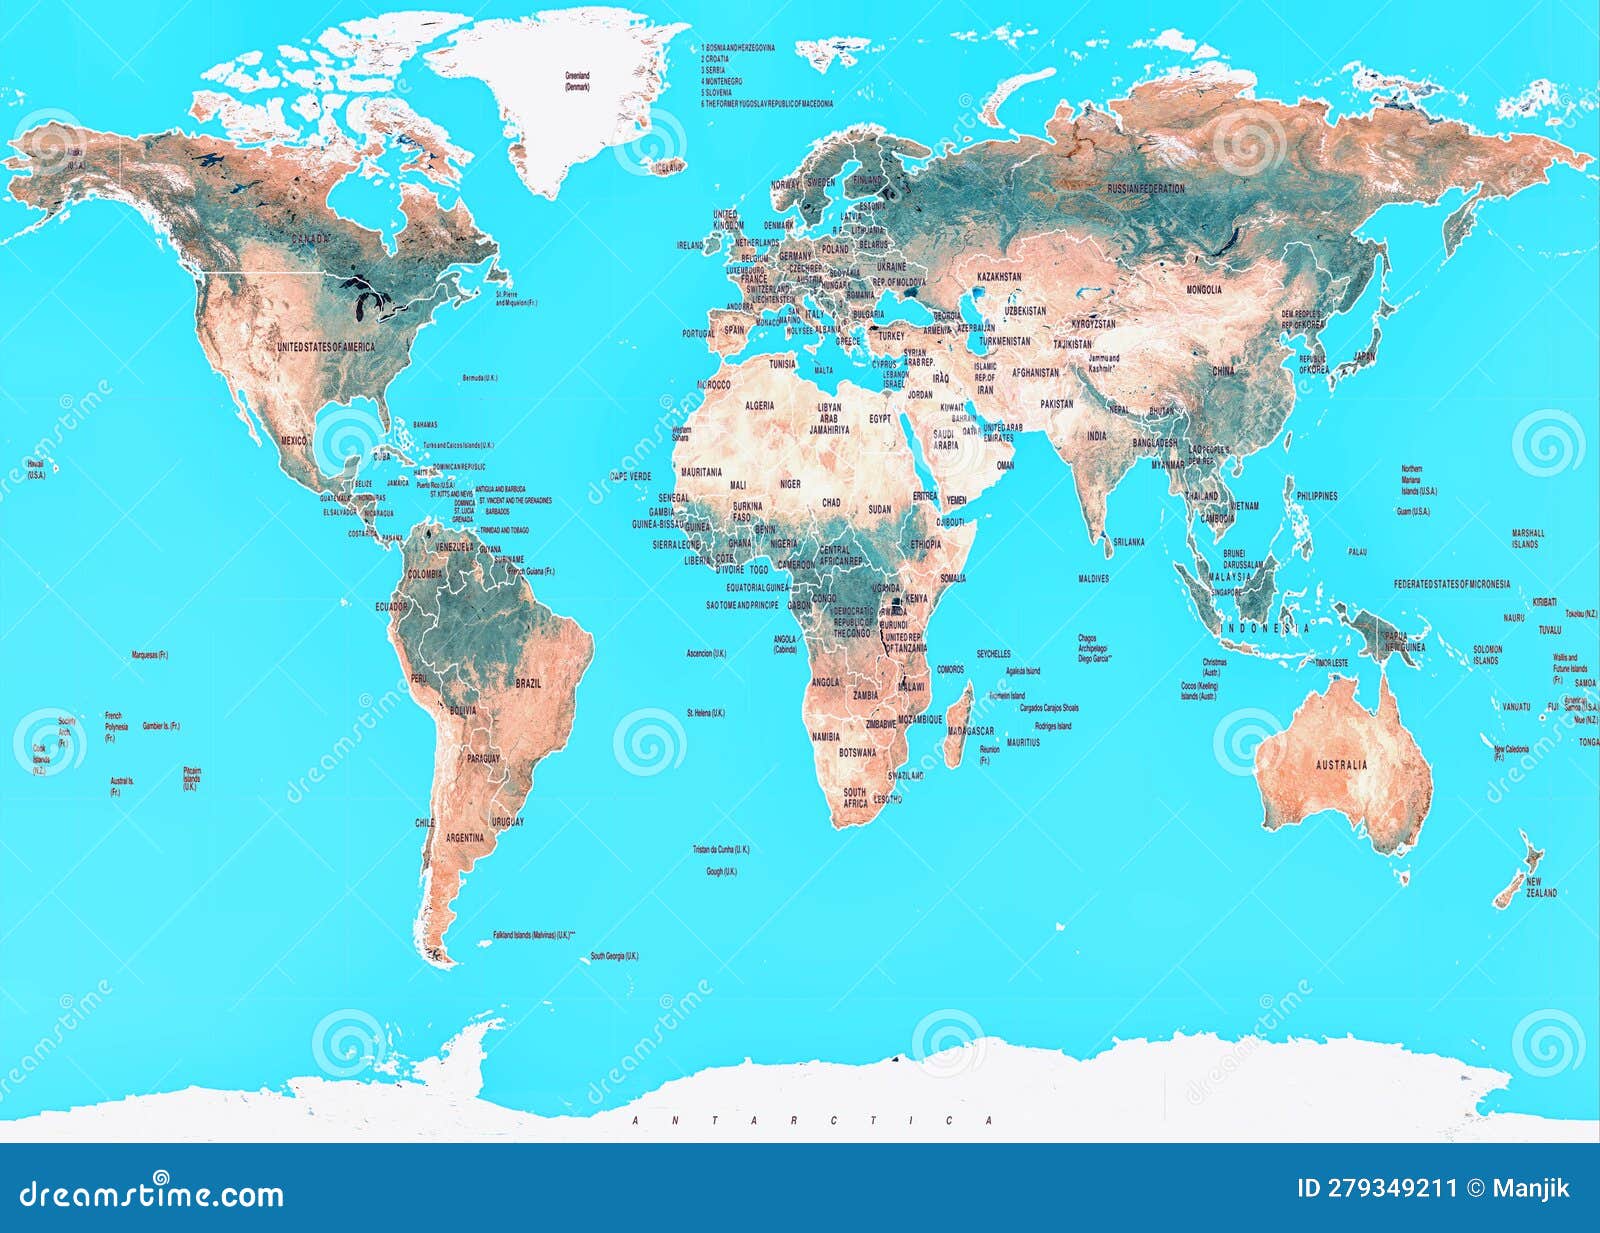 Colorful World Map stock illustration. Illustration of mural - 279349211